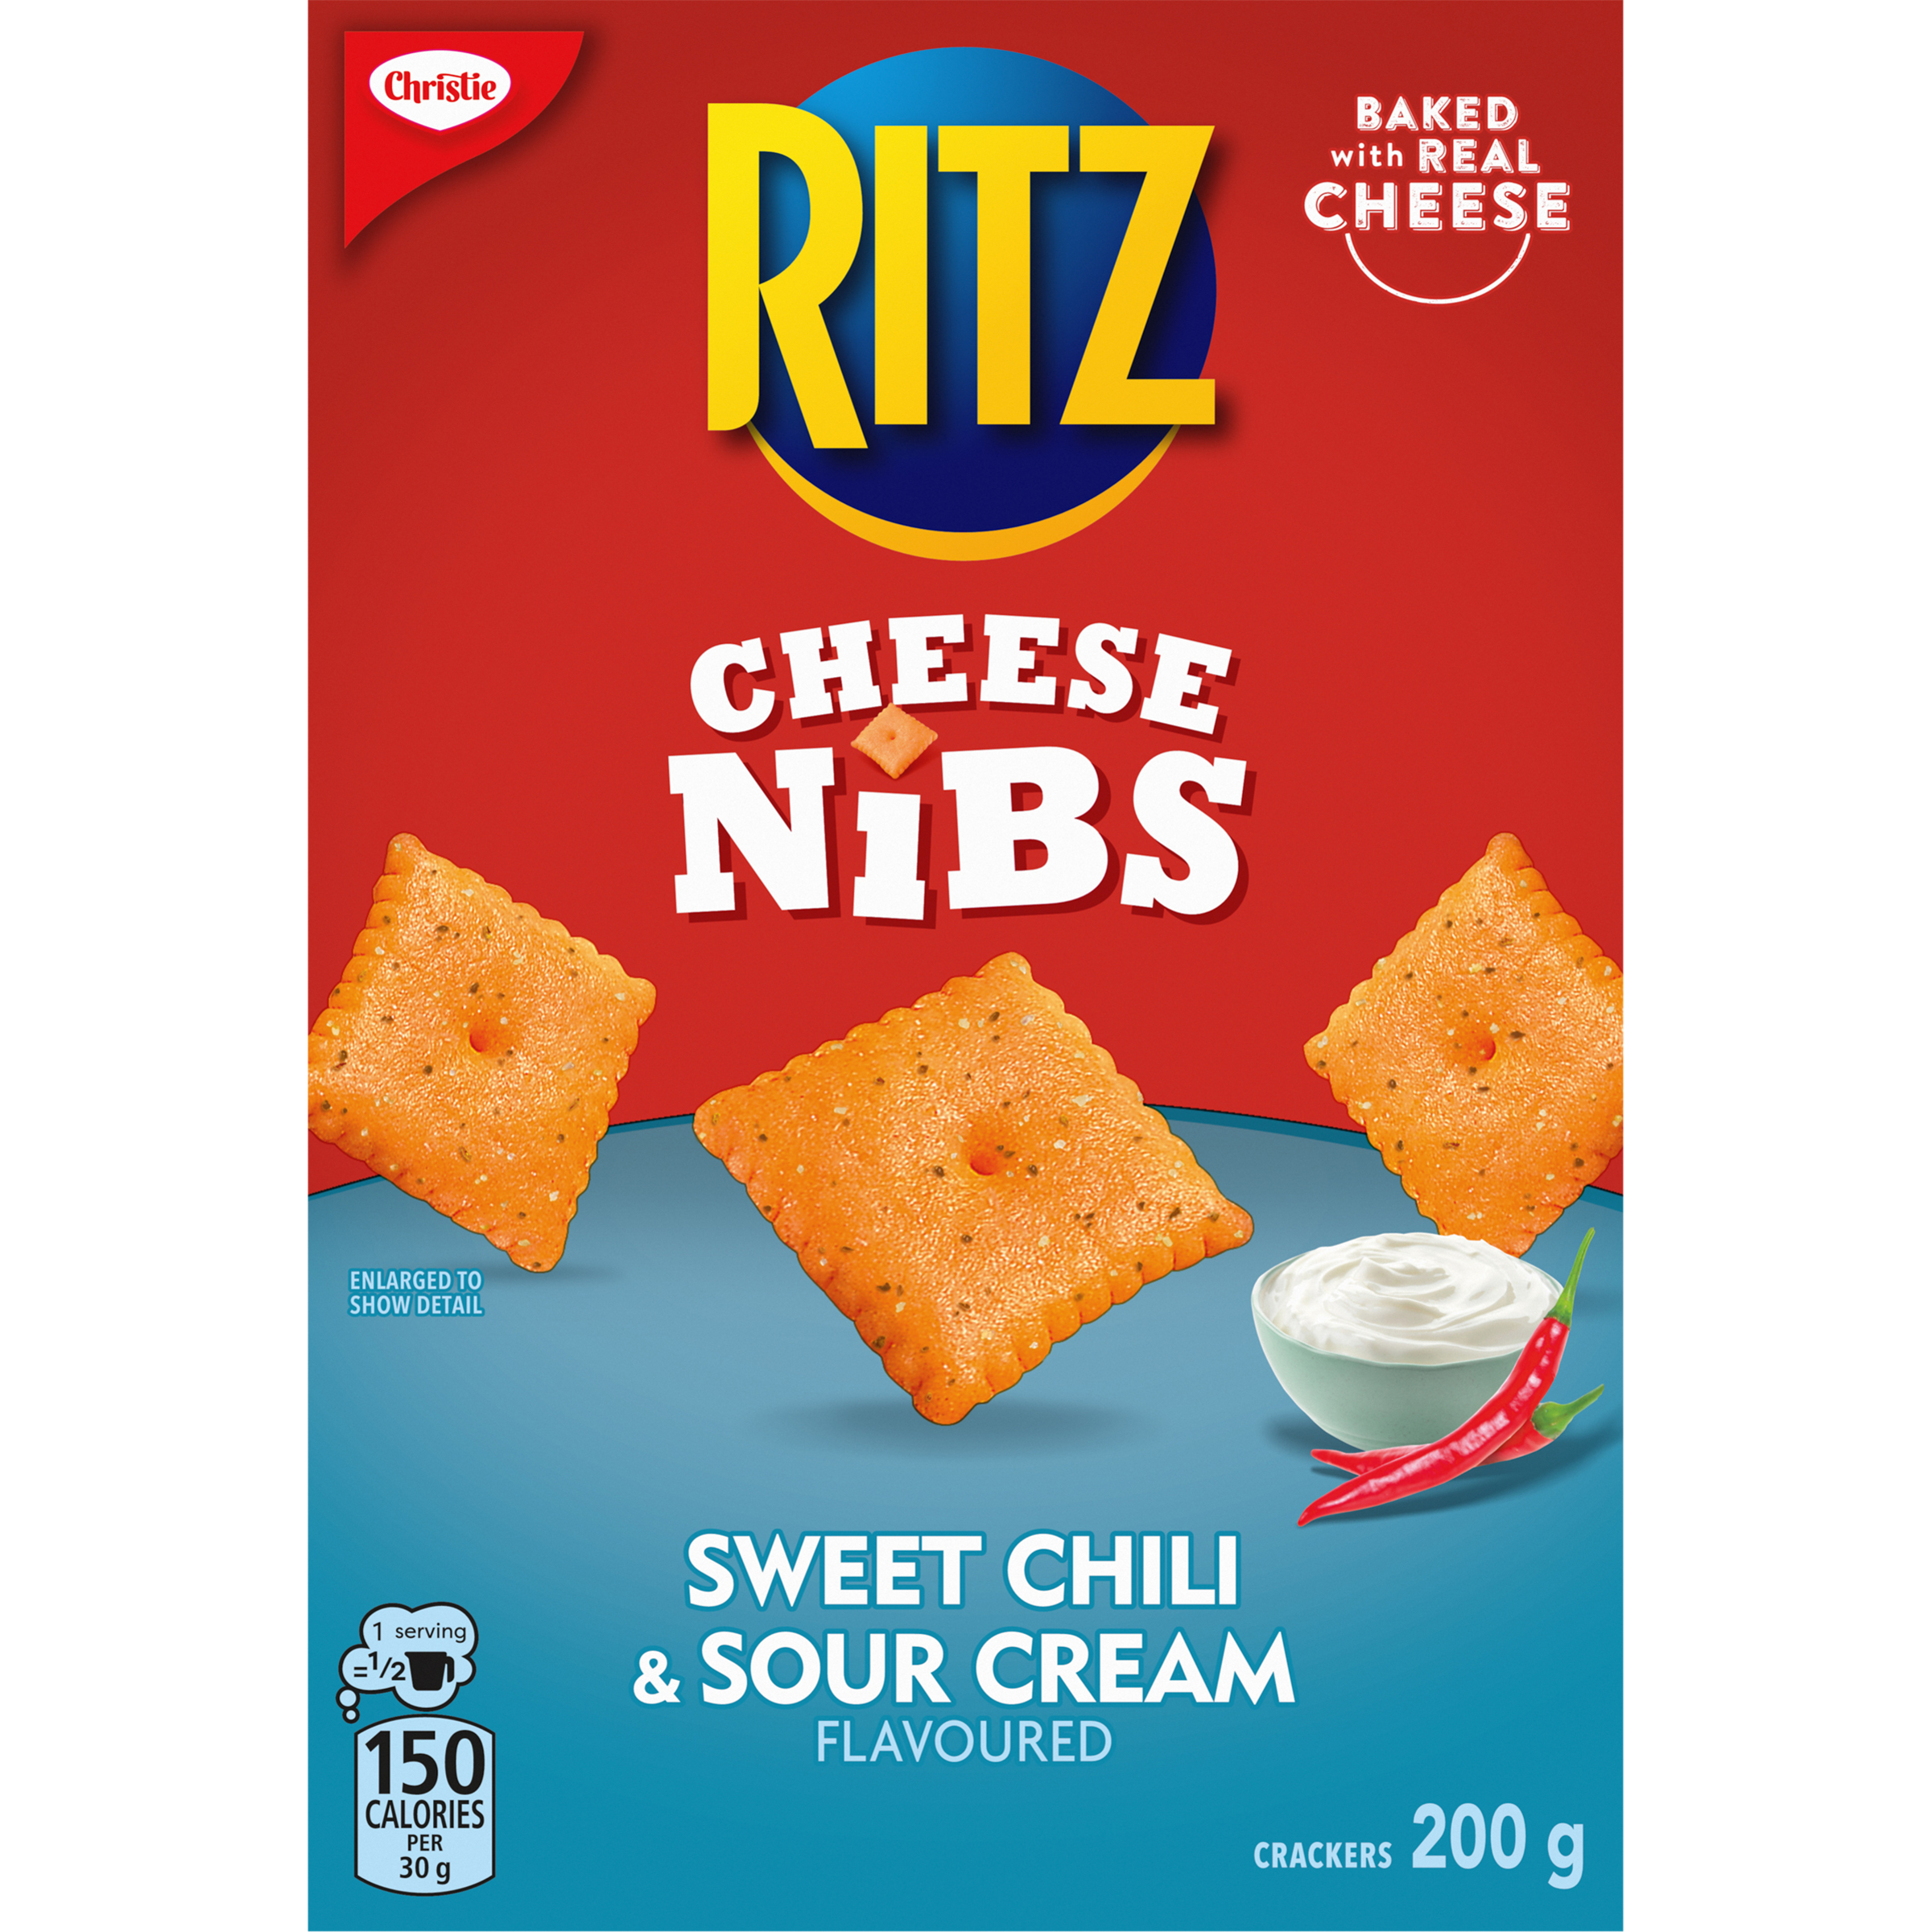 CHRISTIE RITZ CHEESE NIBS SWEET CHILI & SOUR CREAM 200G -2